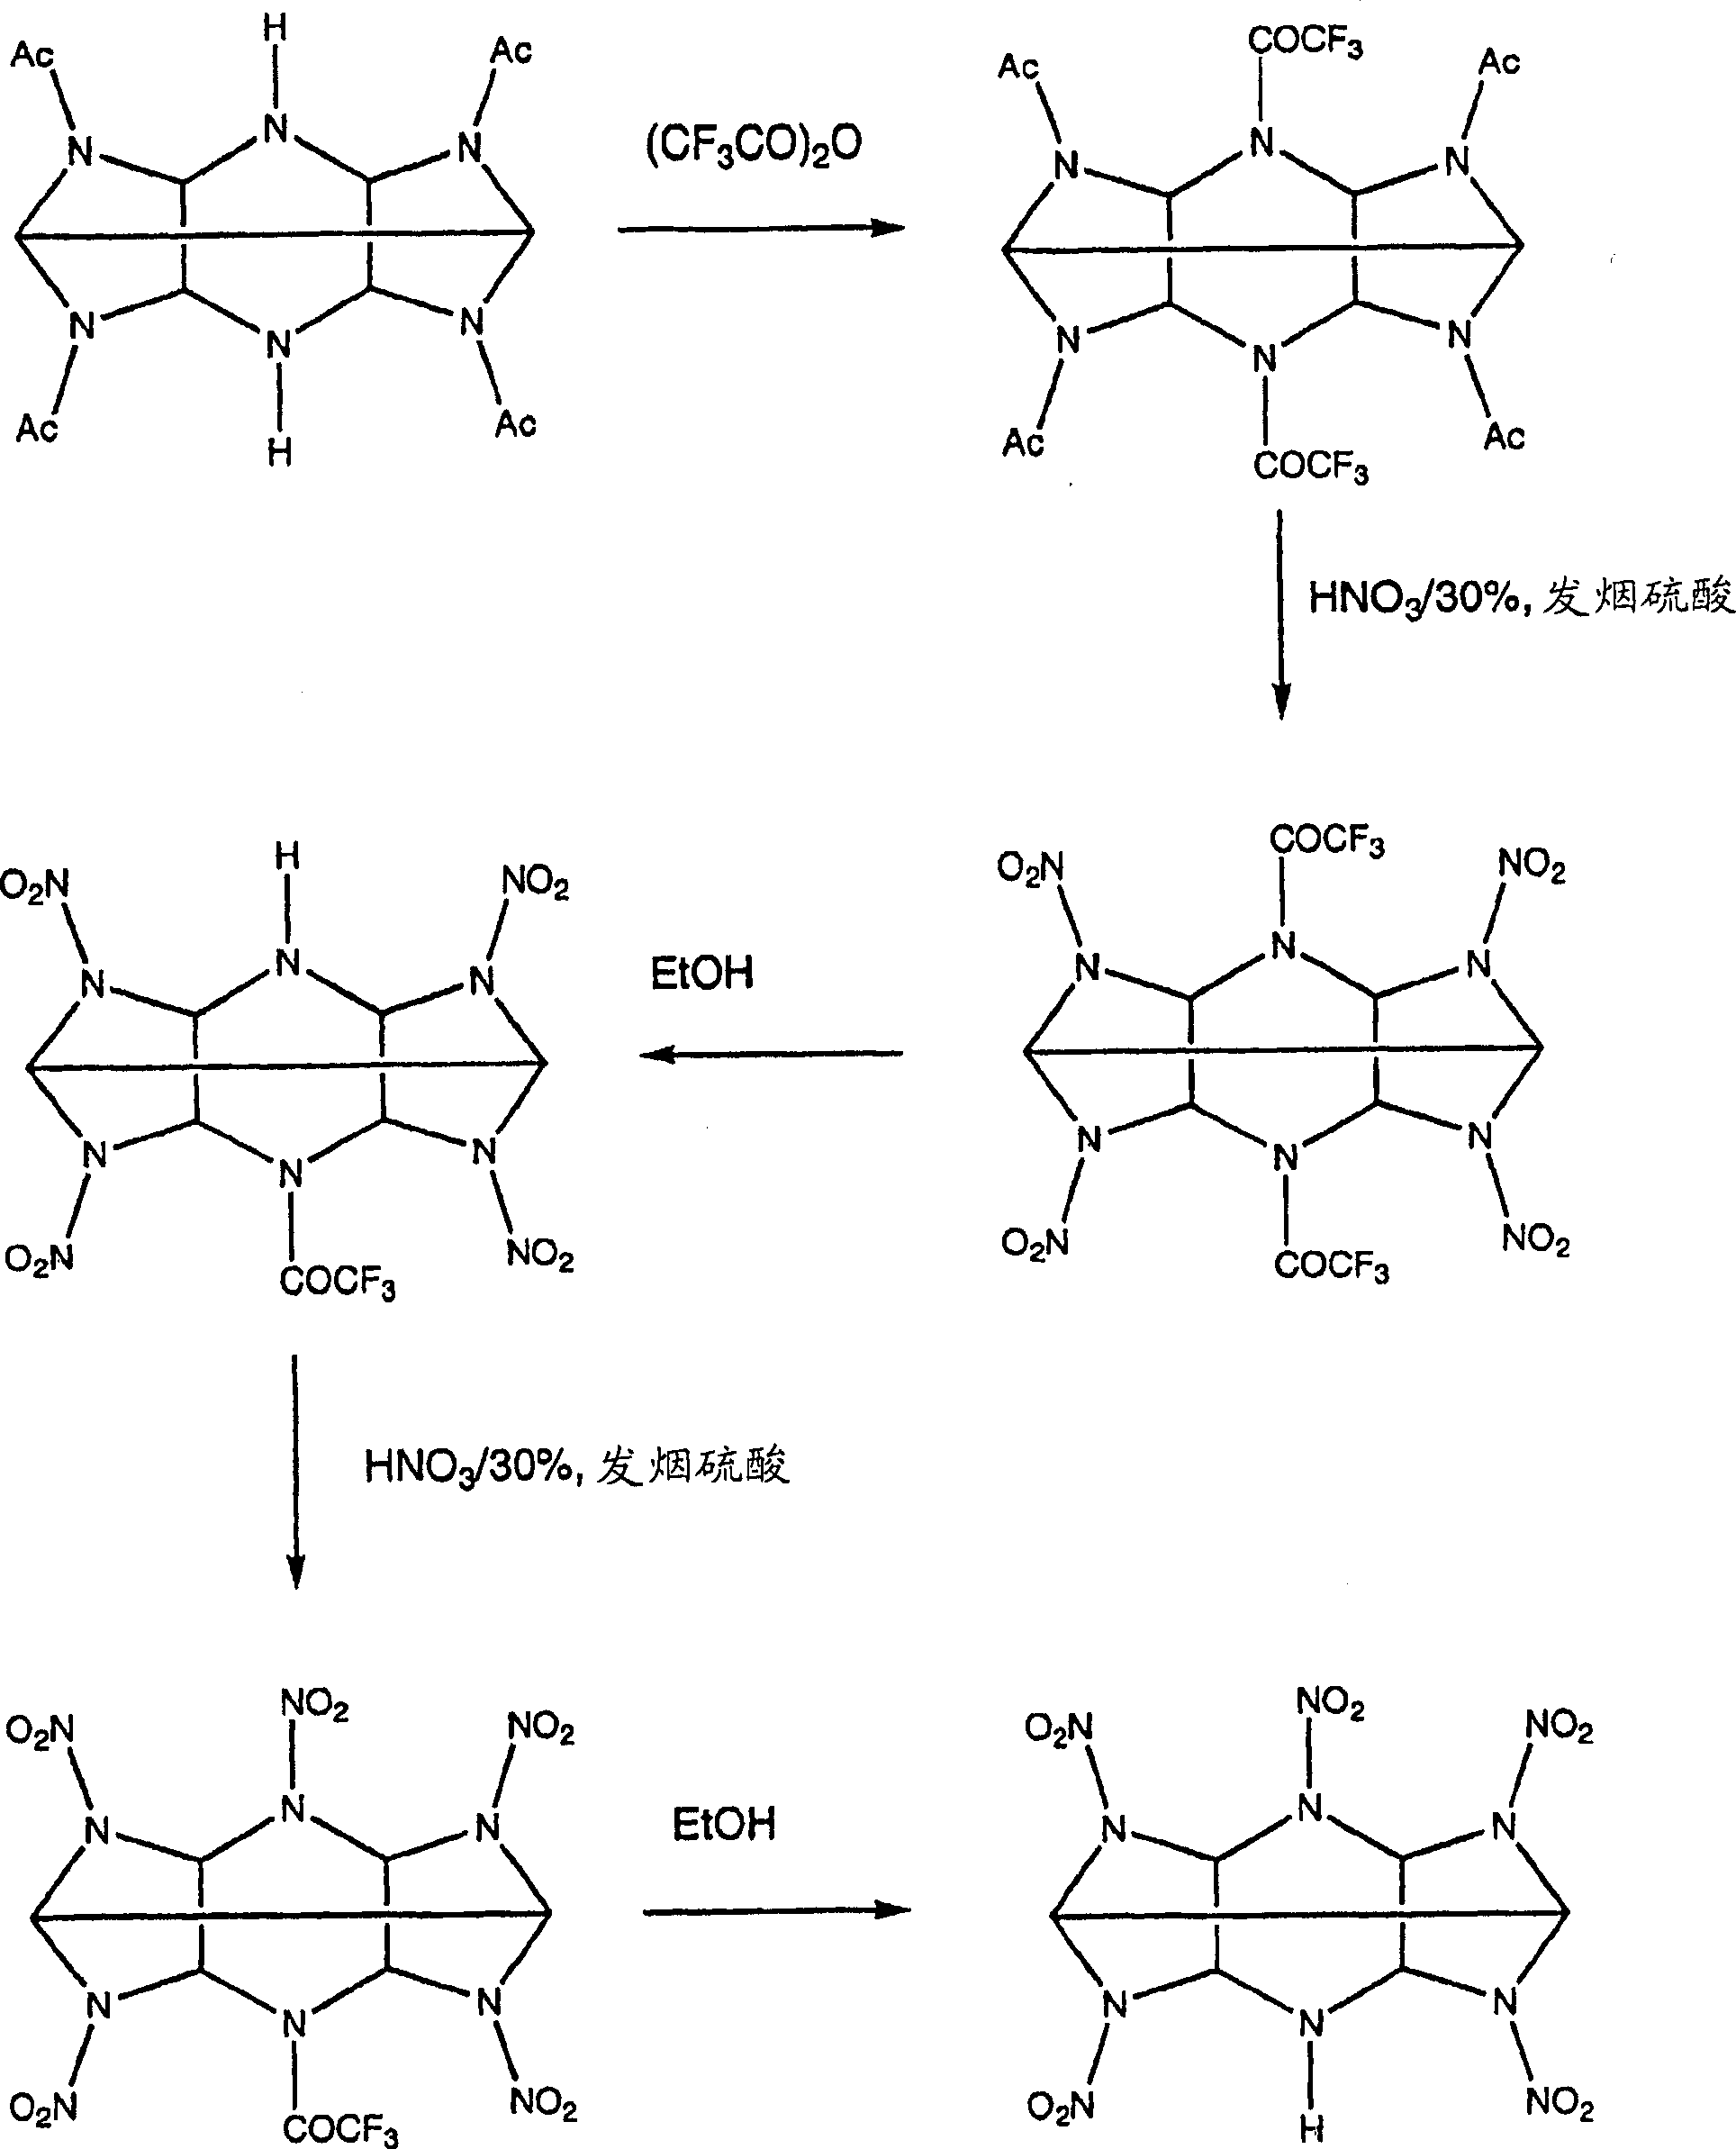 Mono amine and diamine derivatives of cl-20